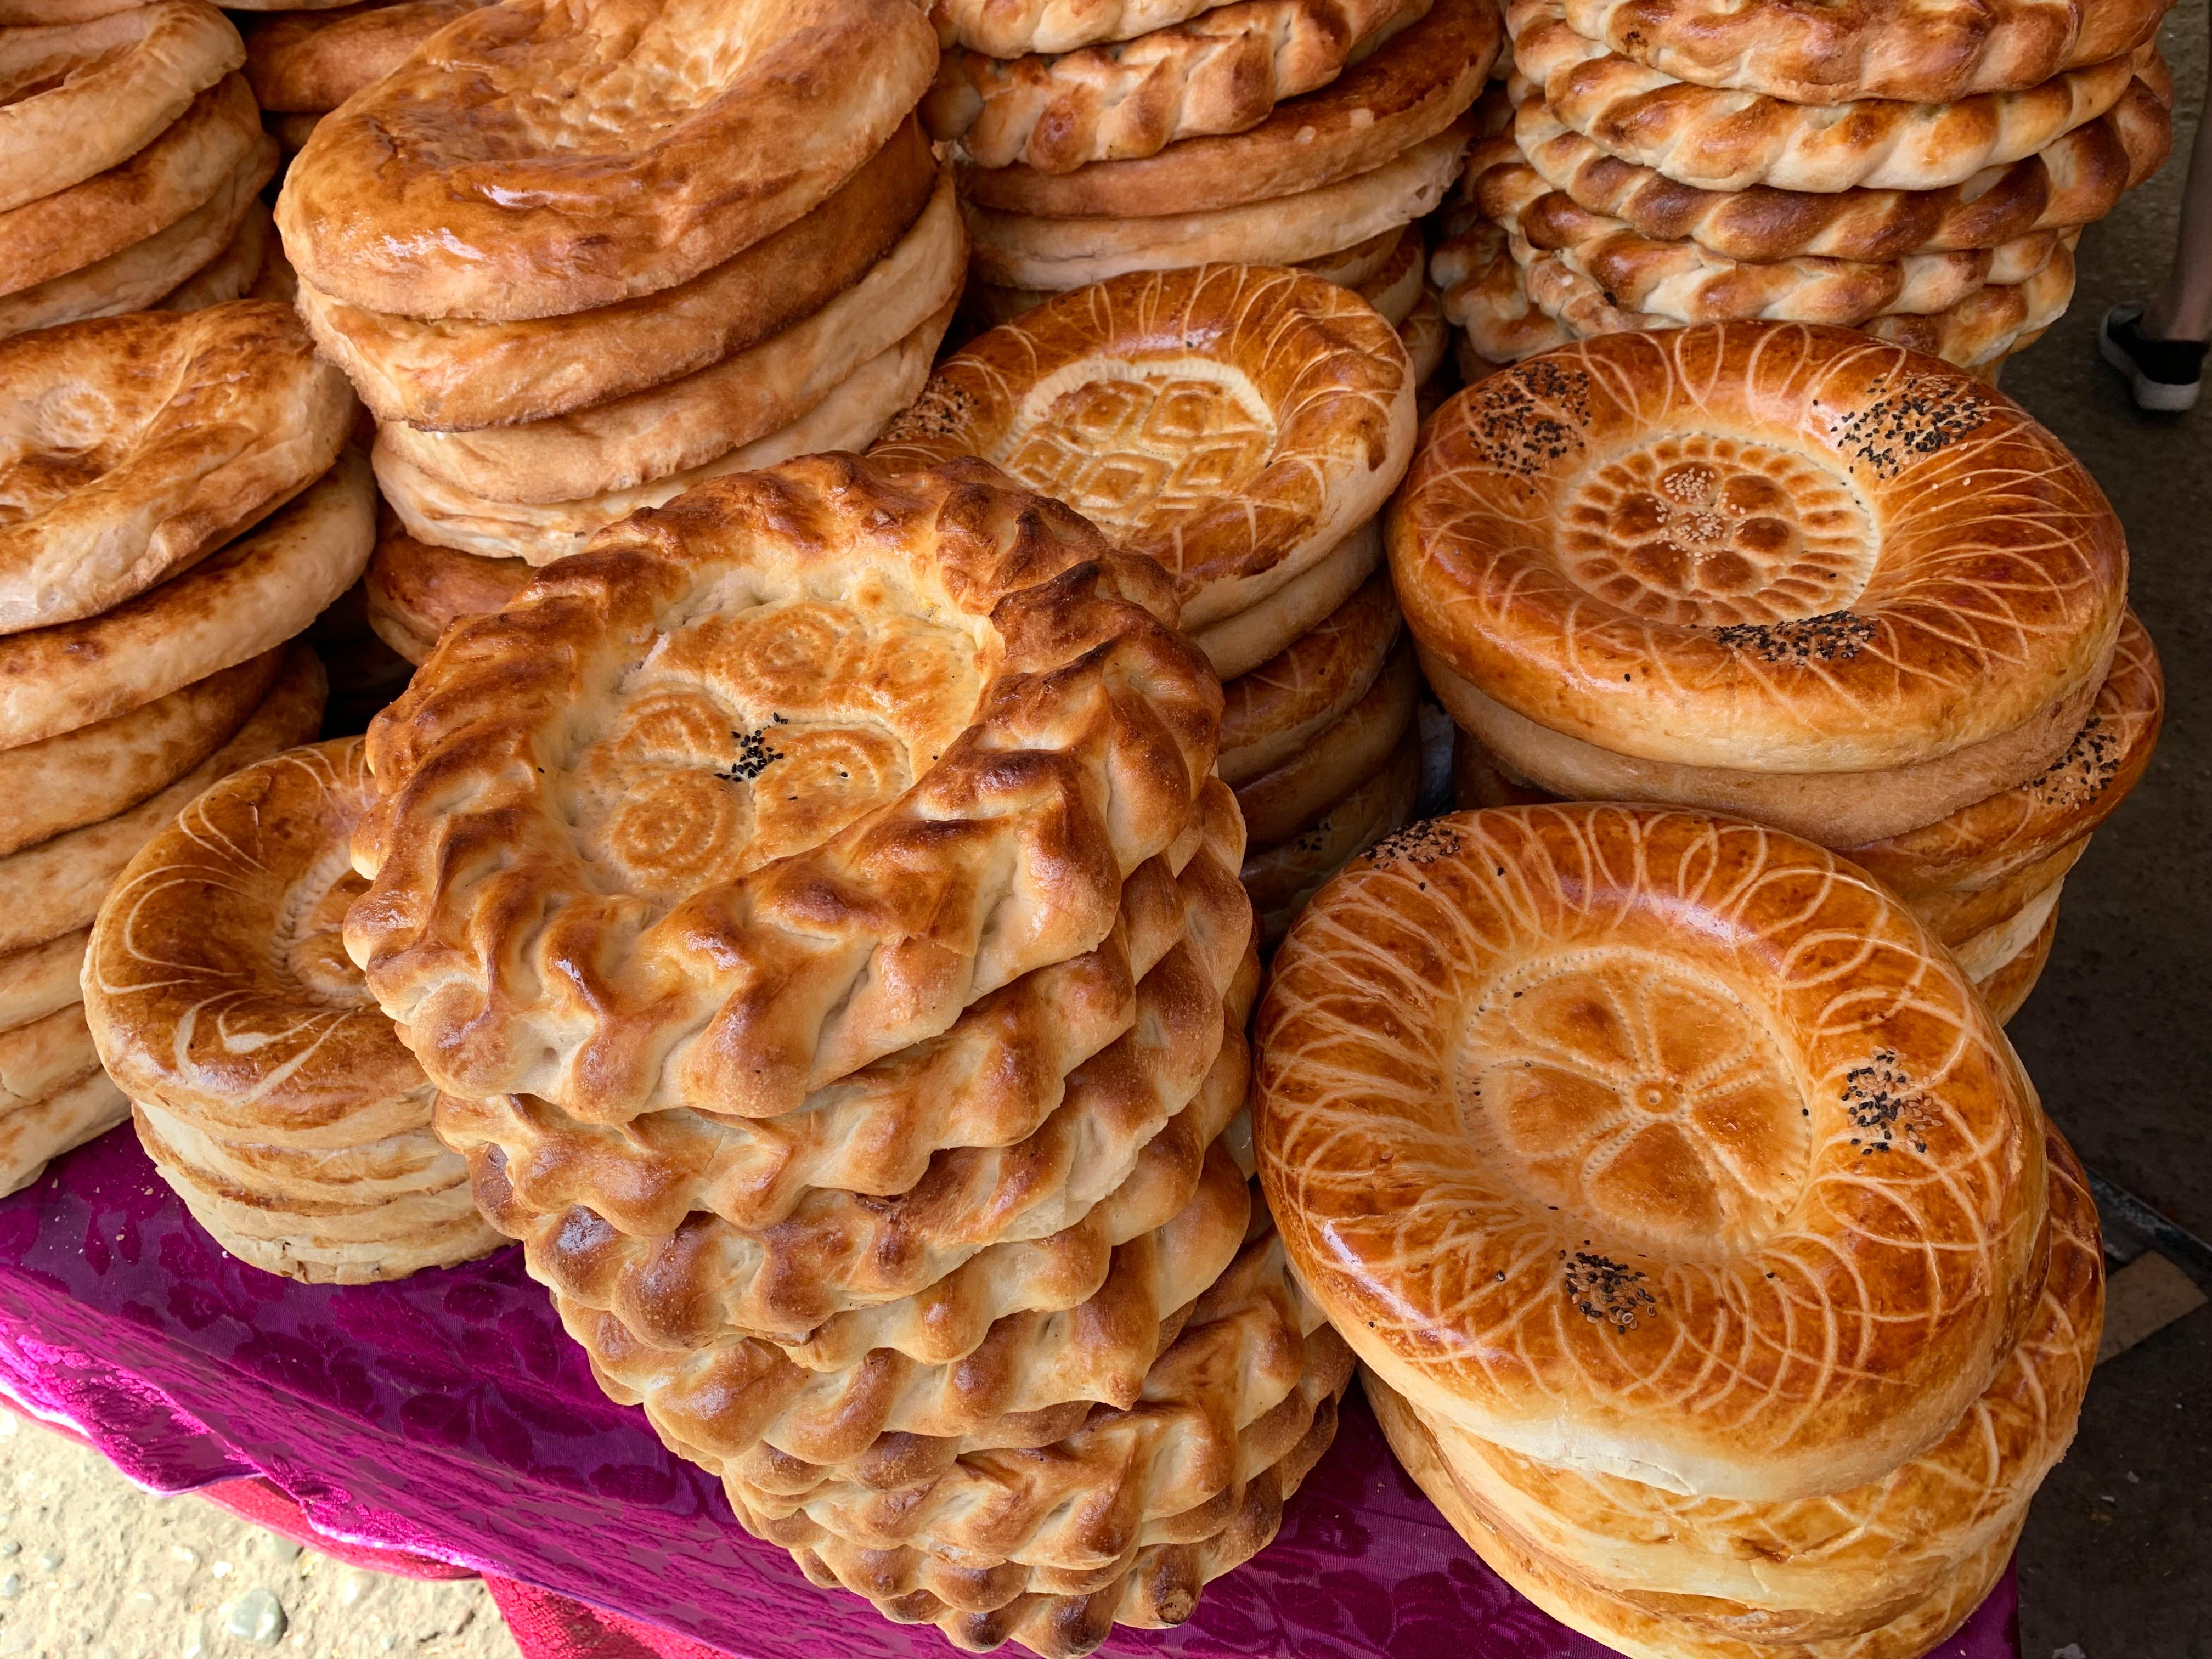 The beautiful designs of lepyoshka bread © Slimstyl / Shutterstock